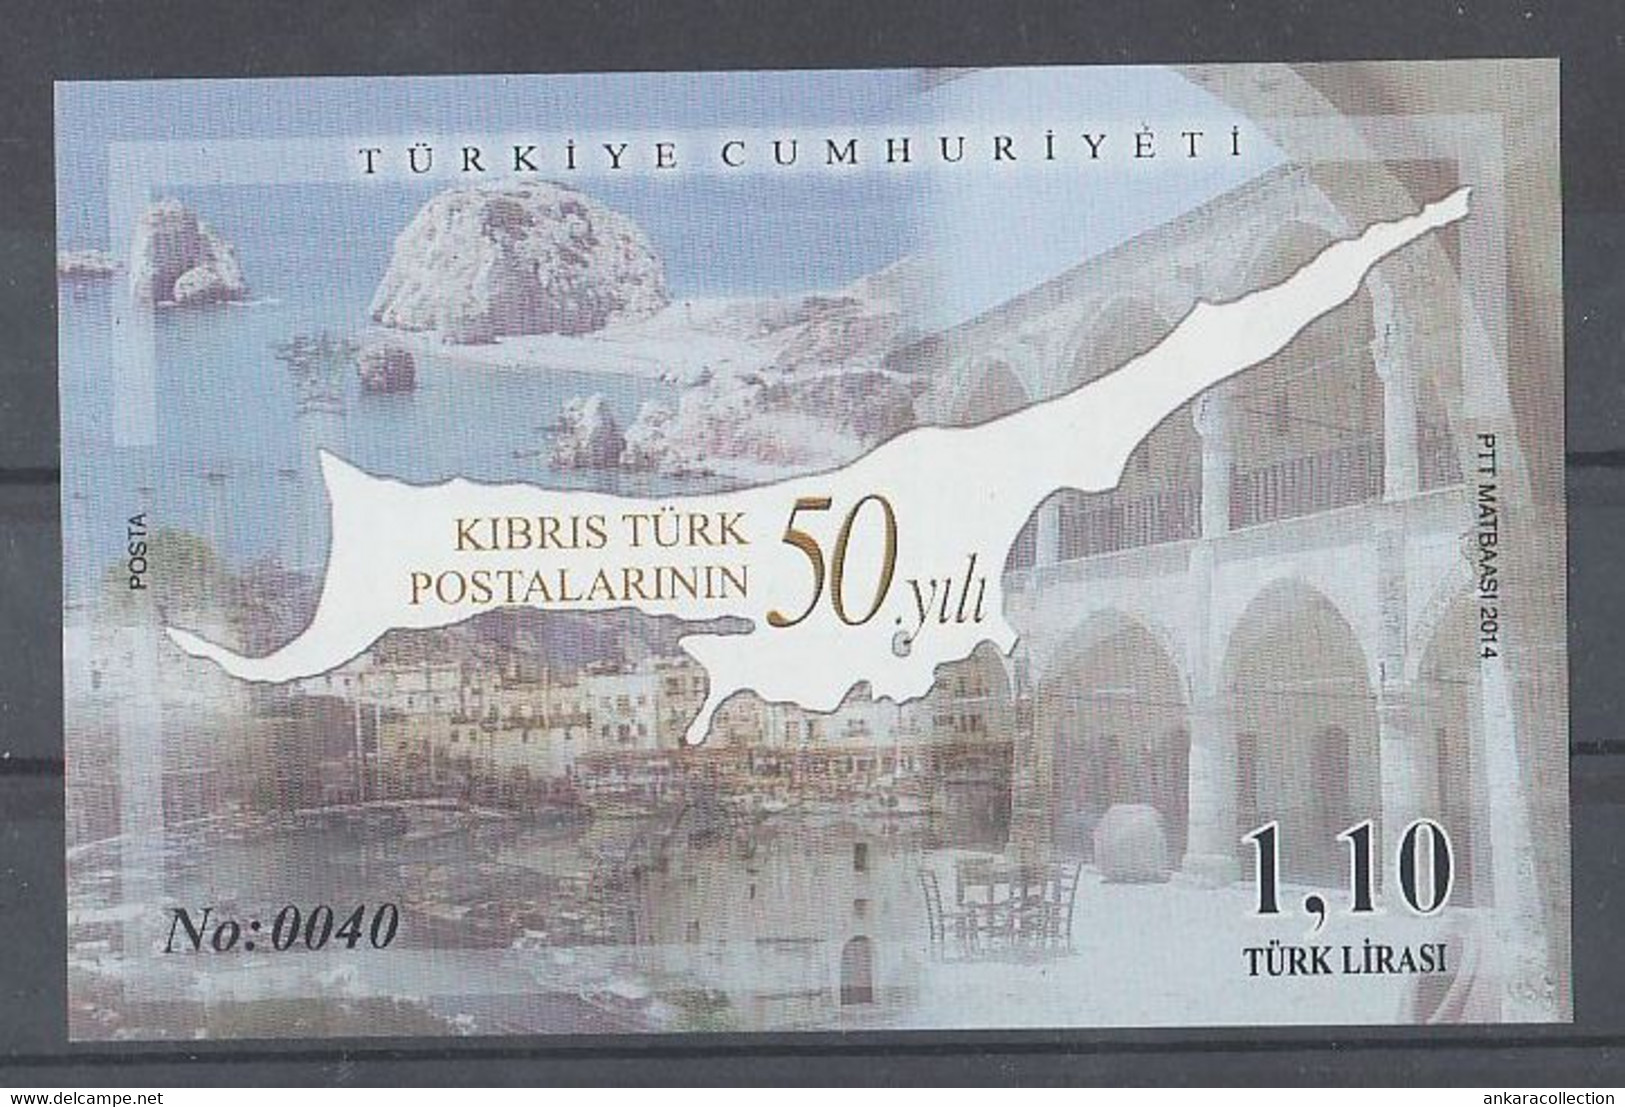 AC - TURKEY STAMP - 50th YEAR OF CYPRUS TURK POSTS MNH NUMBERED BLOCK ANKARA 06 JANUARY 2014 - Booklets